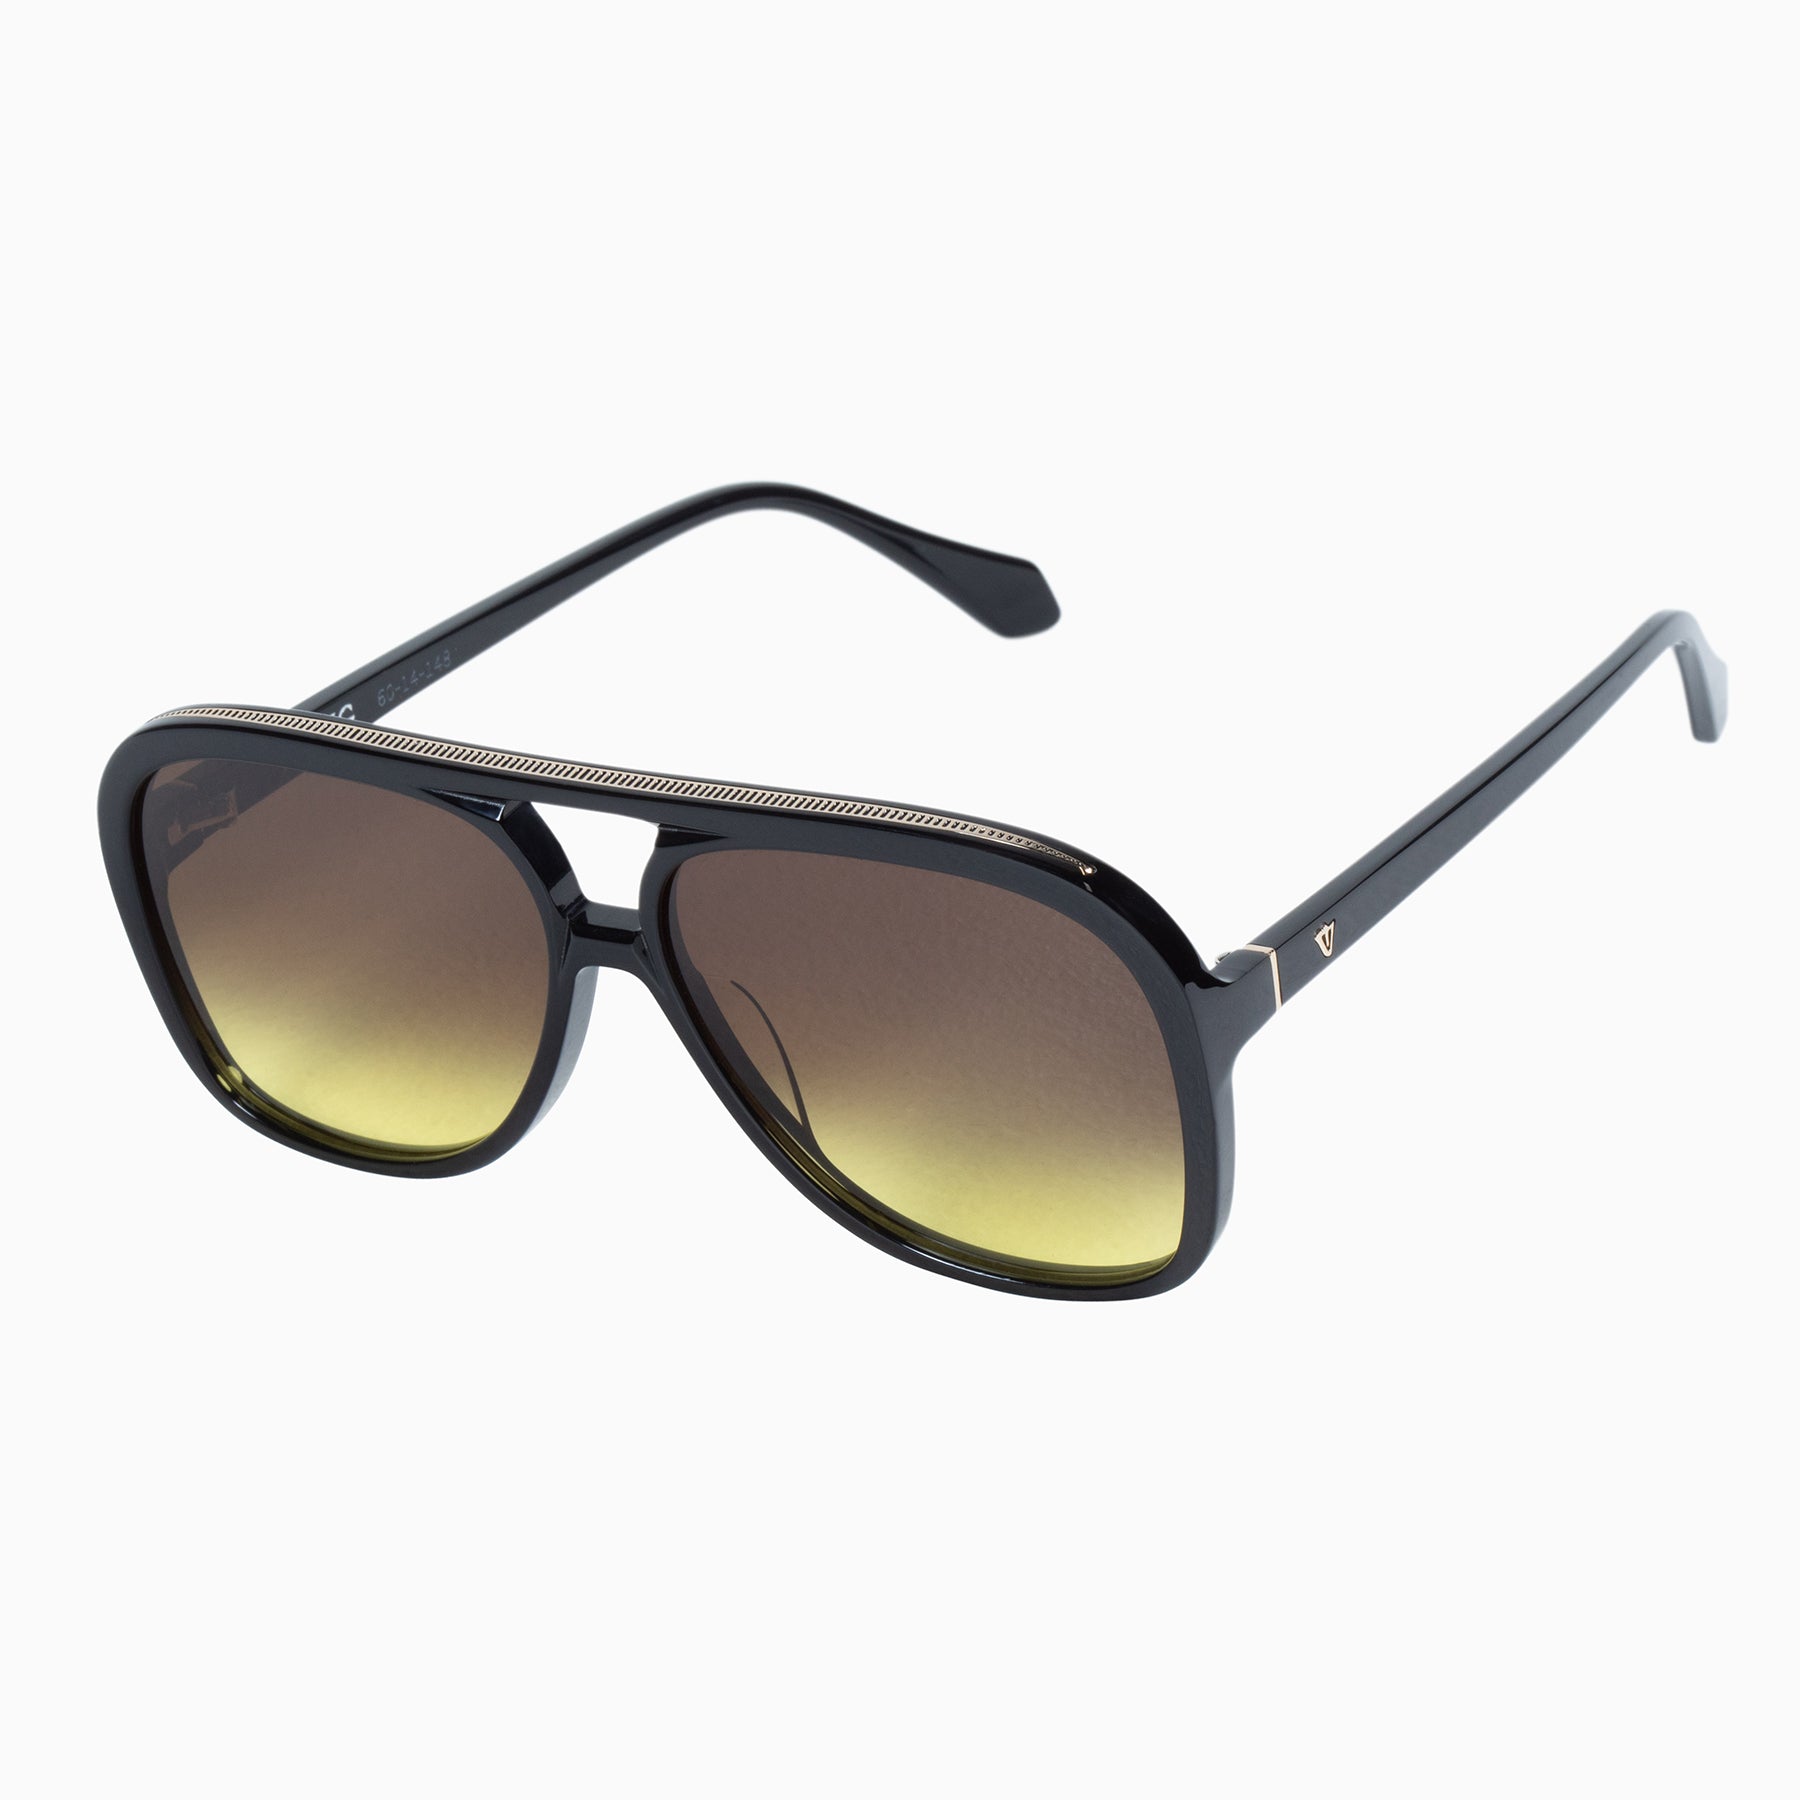 Bang | Sunglasses - Gloss Black w. Gold Metal Trim / Brown to Yellow Gradient Lens